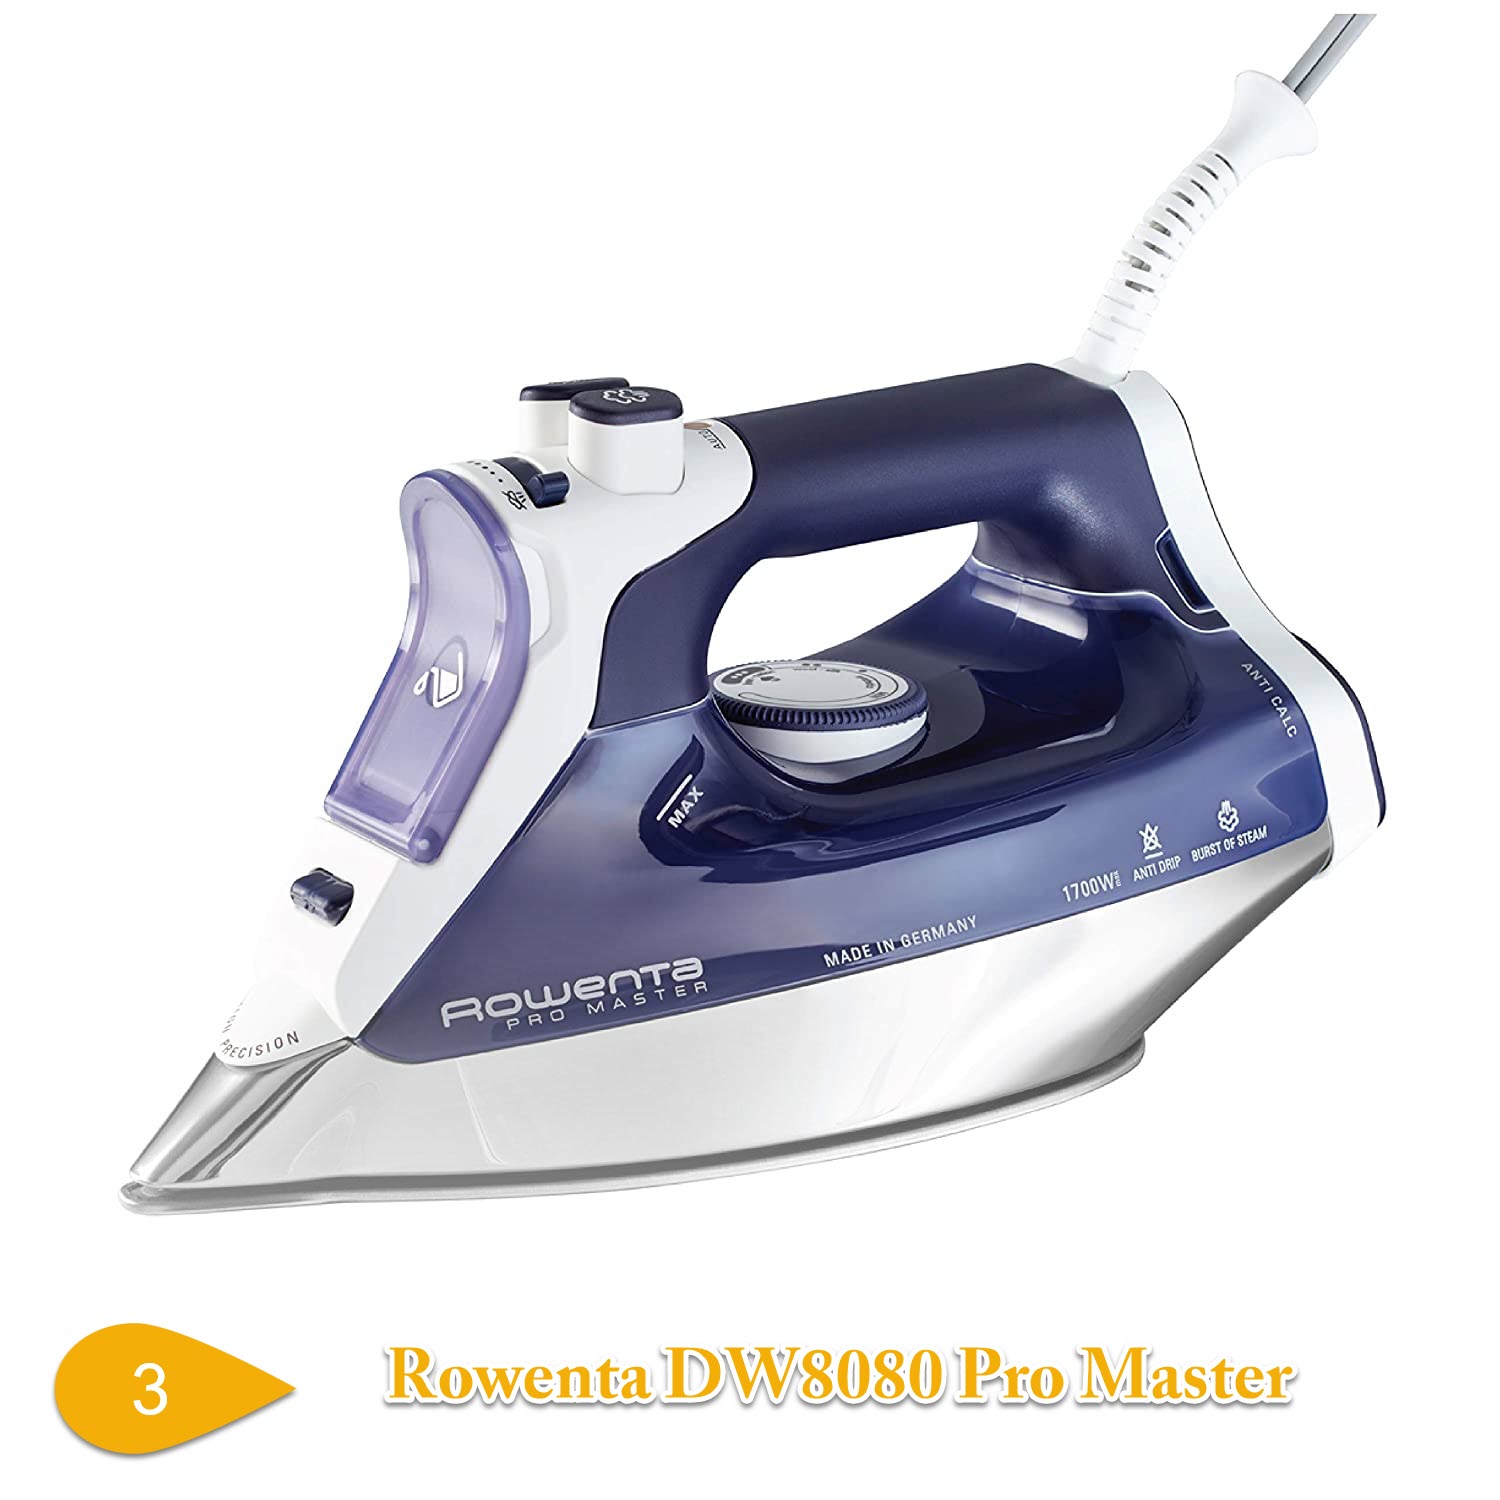 Rowenta DW8080 Pro Master